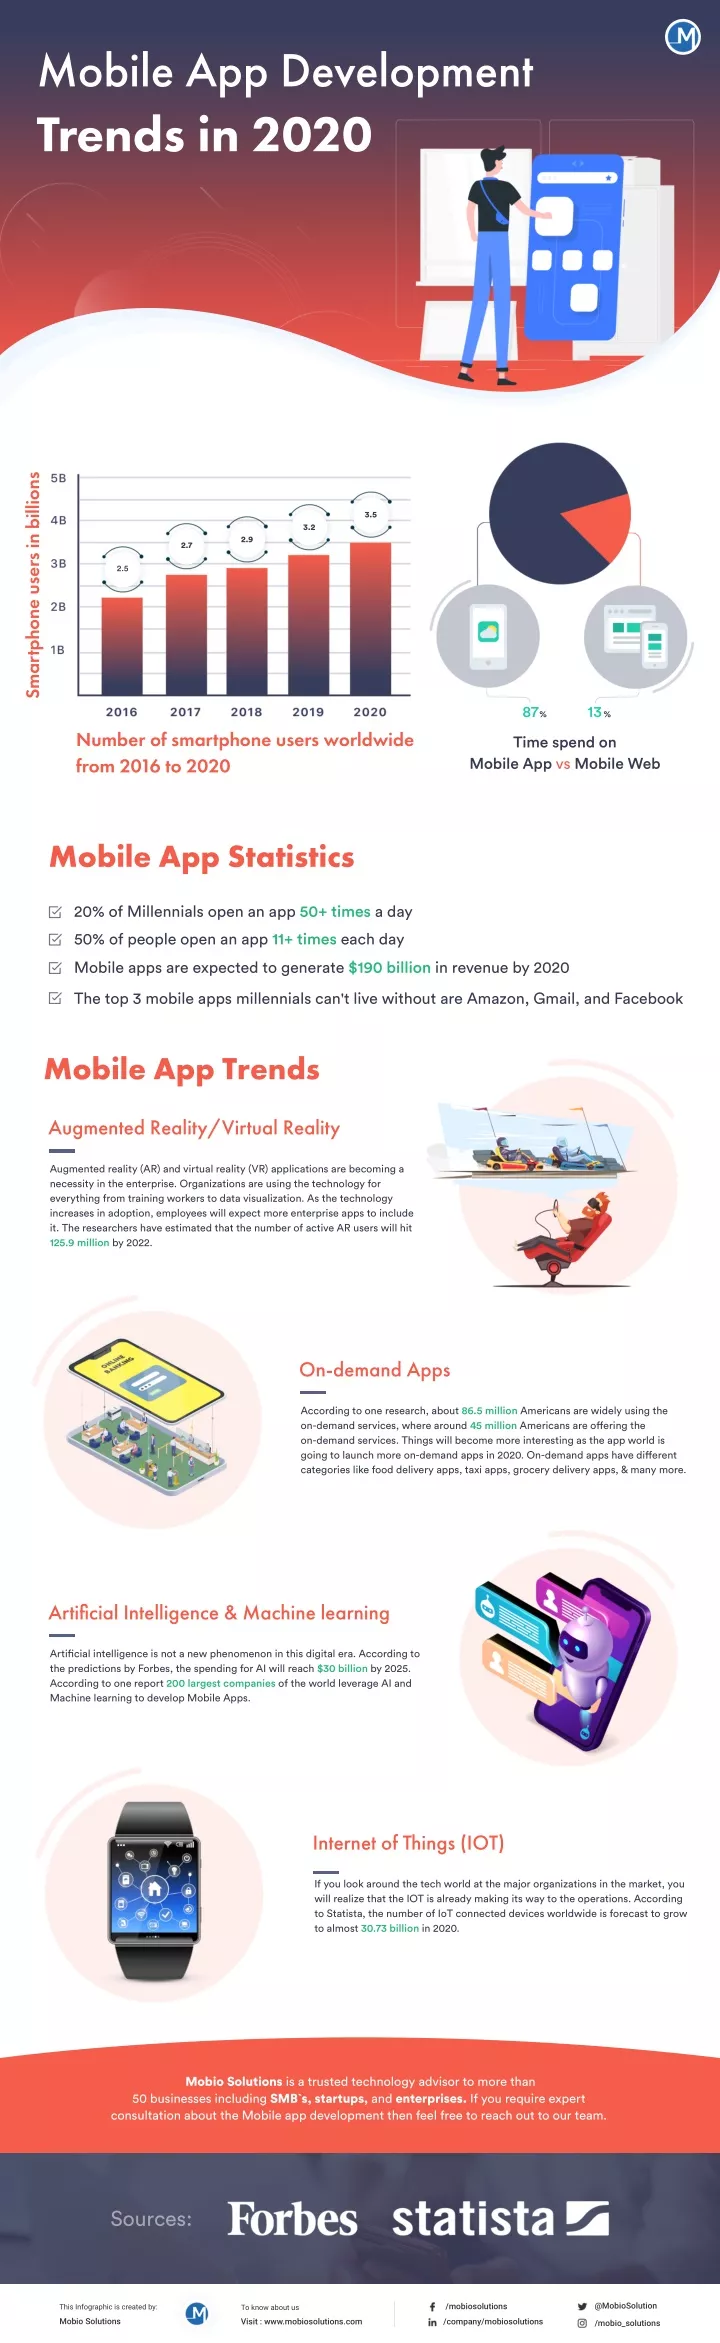 mobile app development trends in 2020